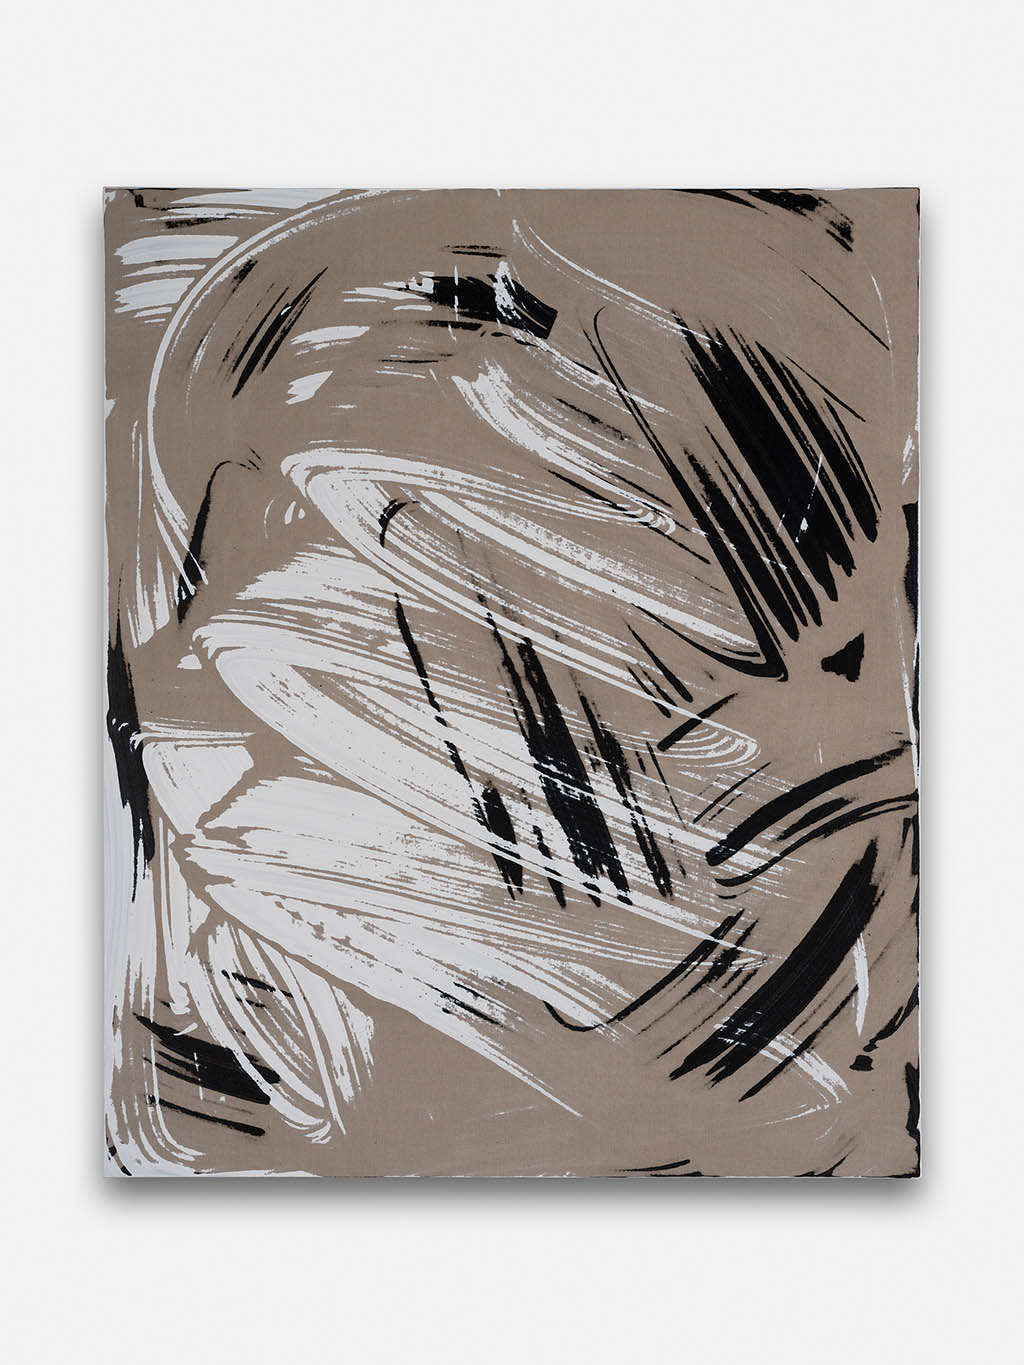 Yago Hortal - Z49. 2021. Acrylic on linen. 230 x 190 cm